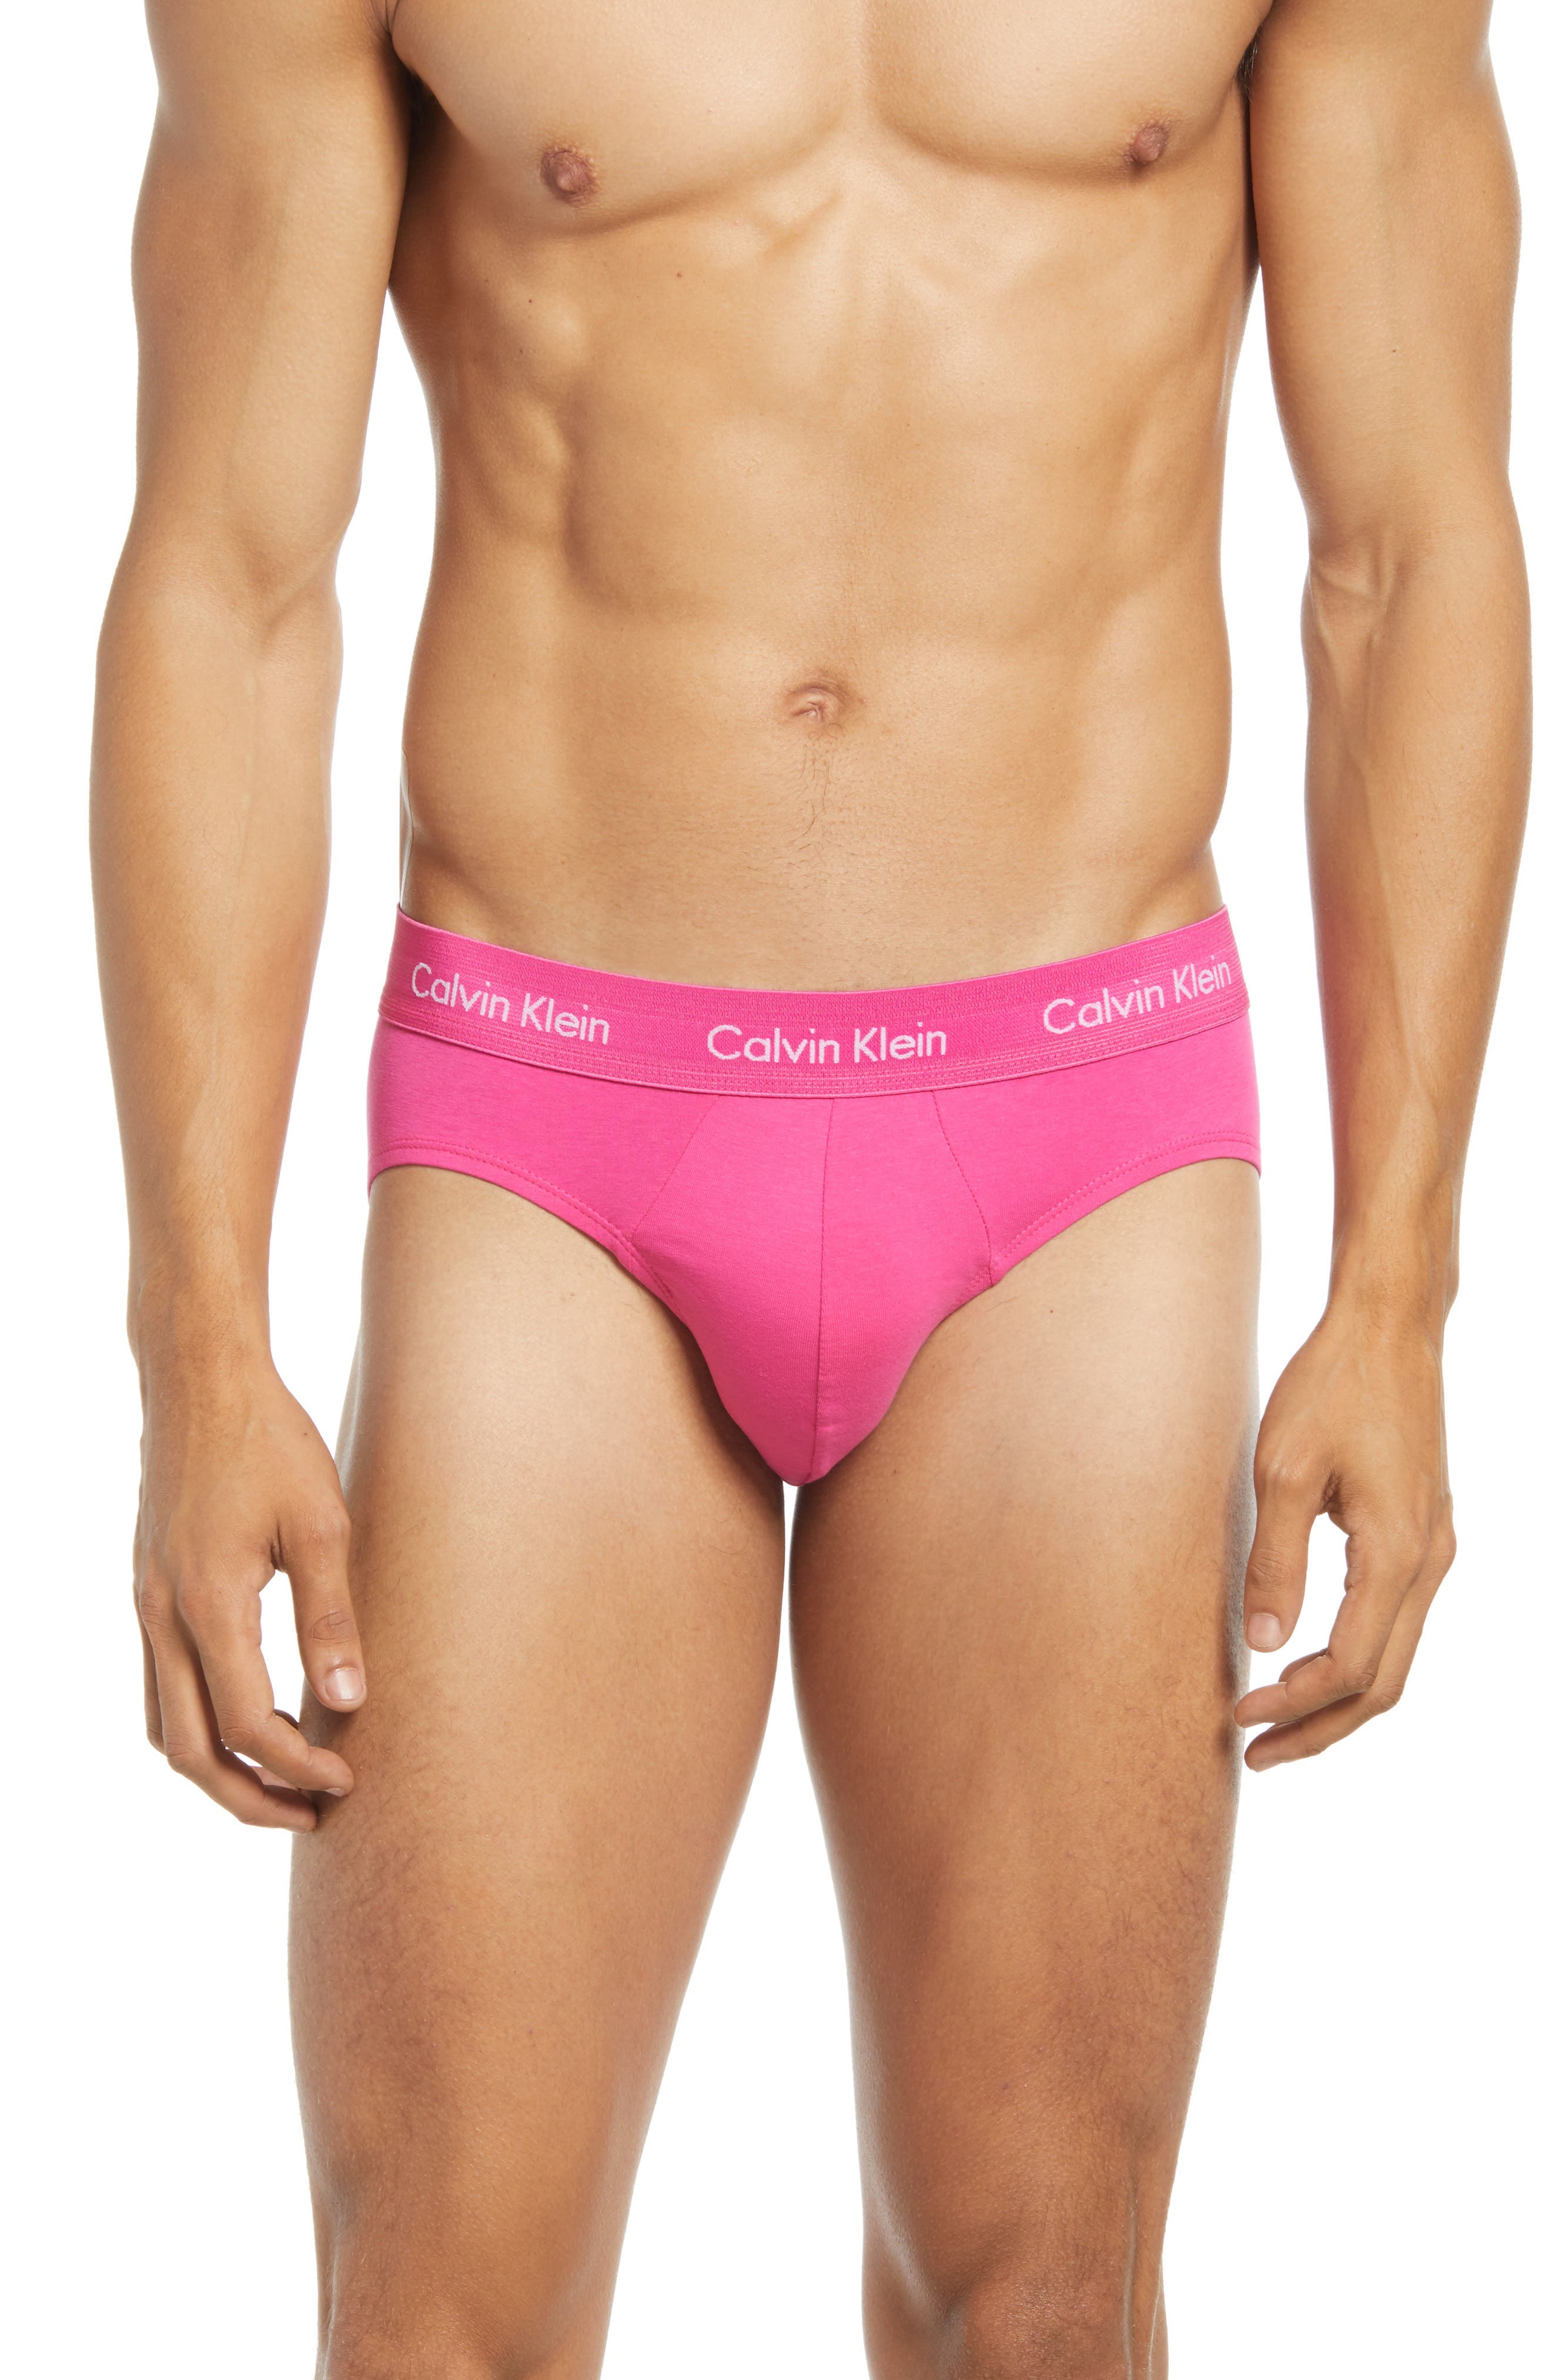 UPC 790812537732 product image for Men's Calvin Klein Assorted 5-Pack Pride Edit Briefs, Size Medium - Pink | upcitemdb.com